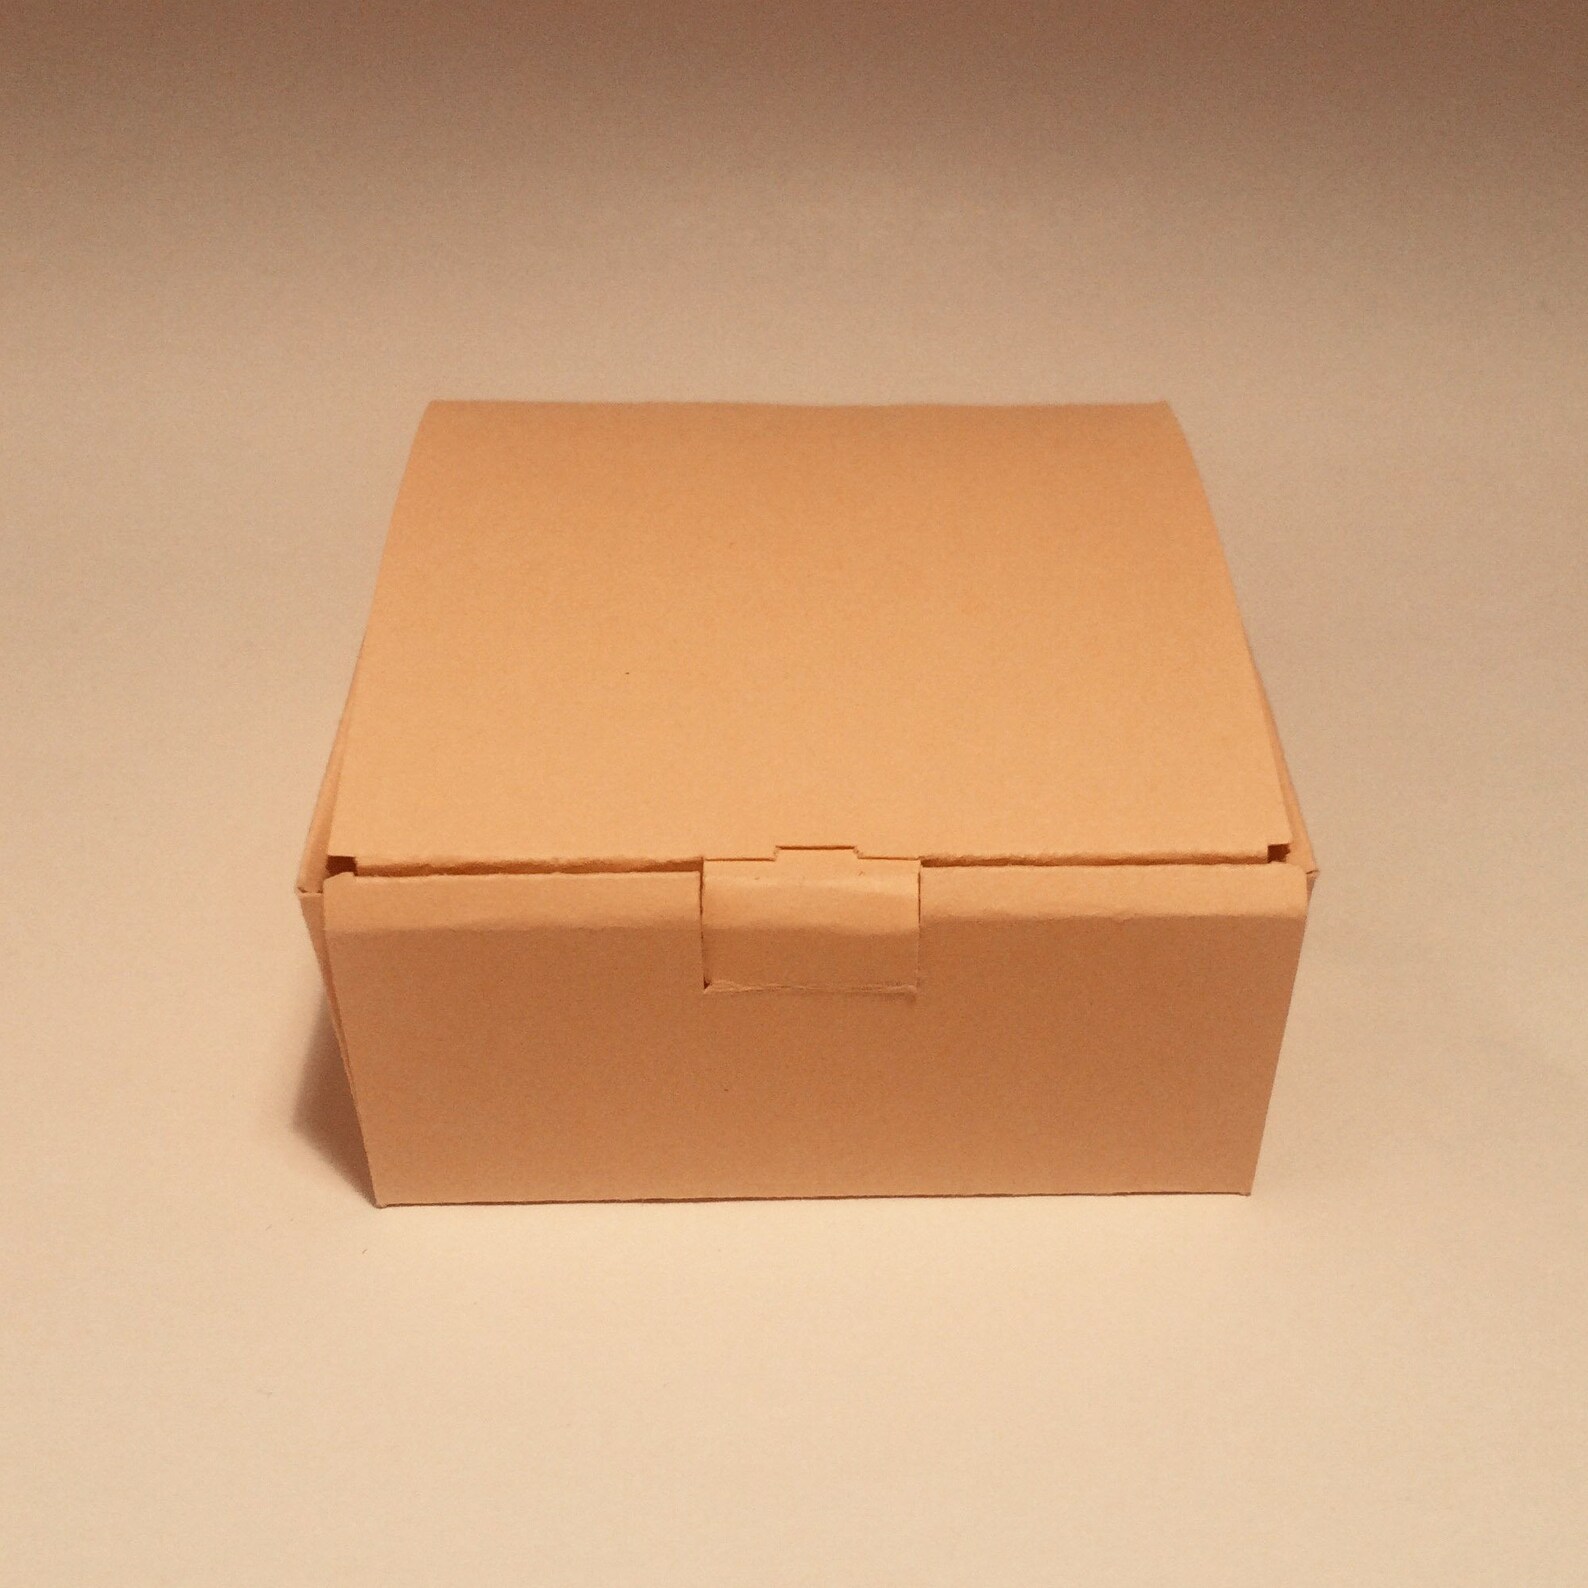 square-box-template-shipping-box-mailing-box-corrugated-etsy